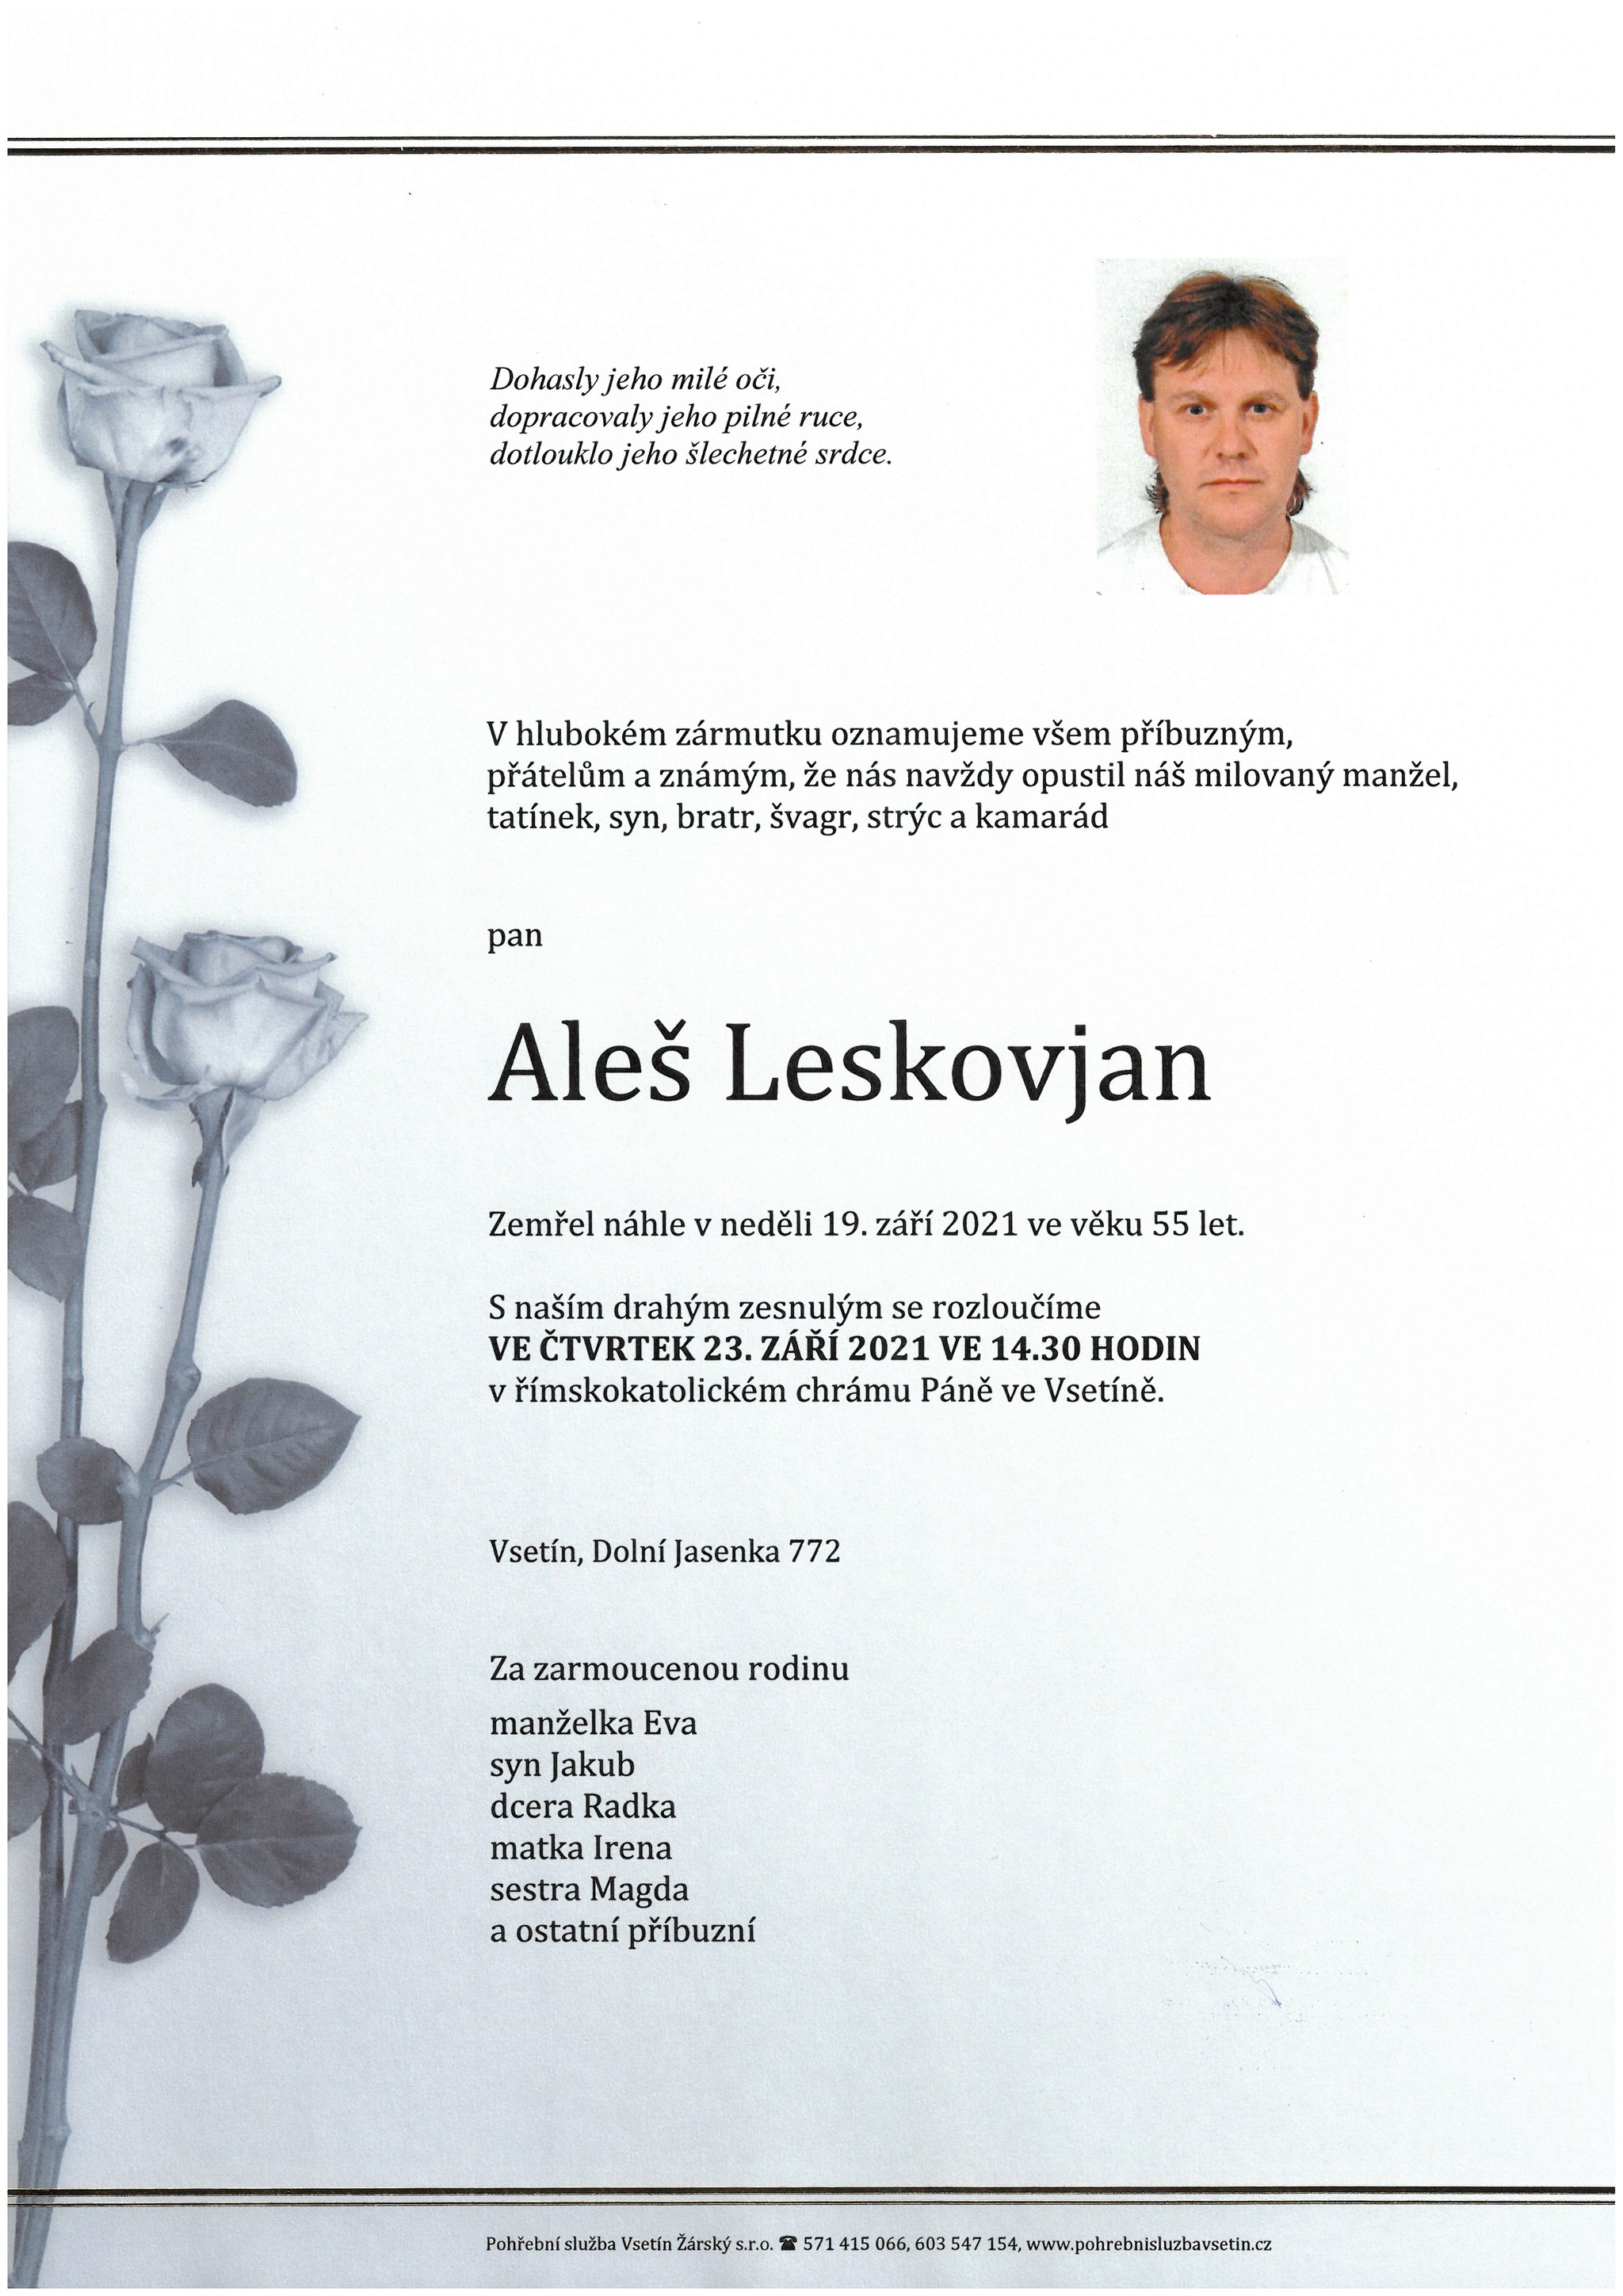 Aleš Leskovjan